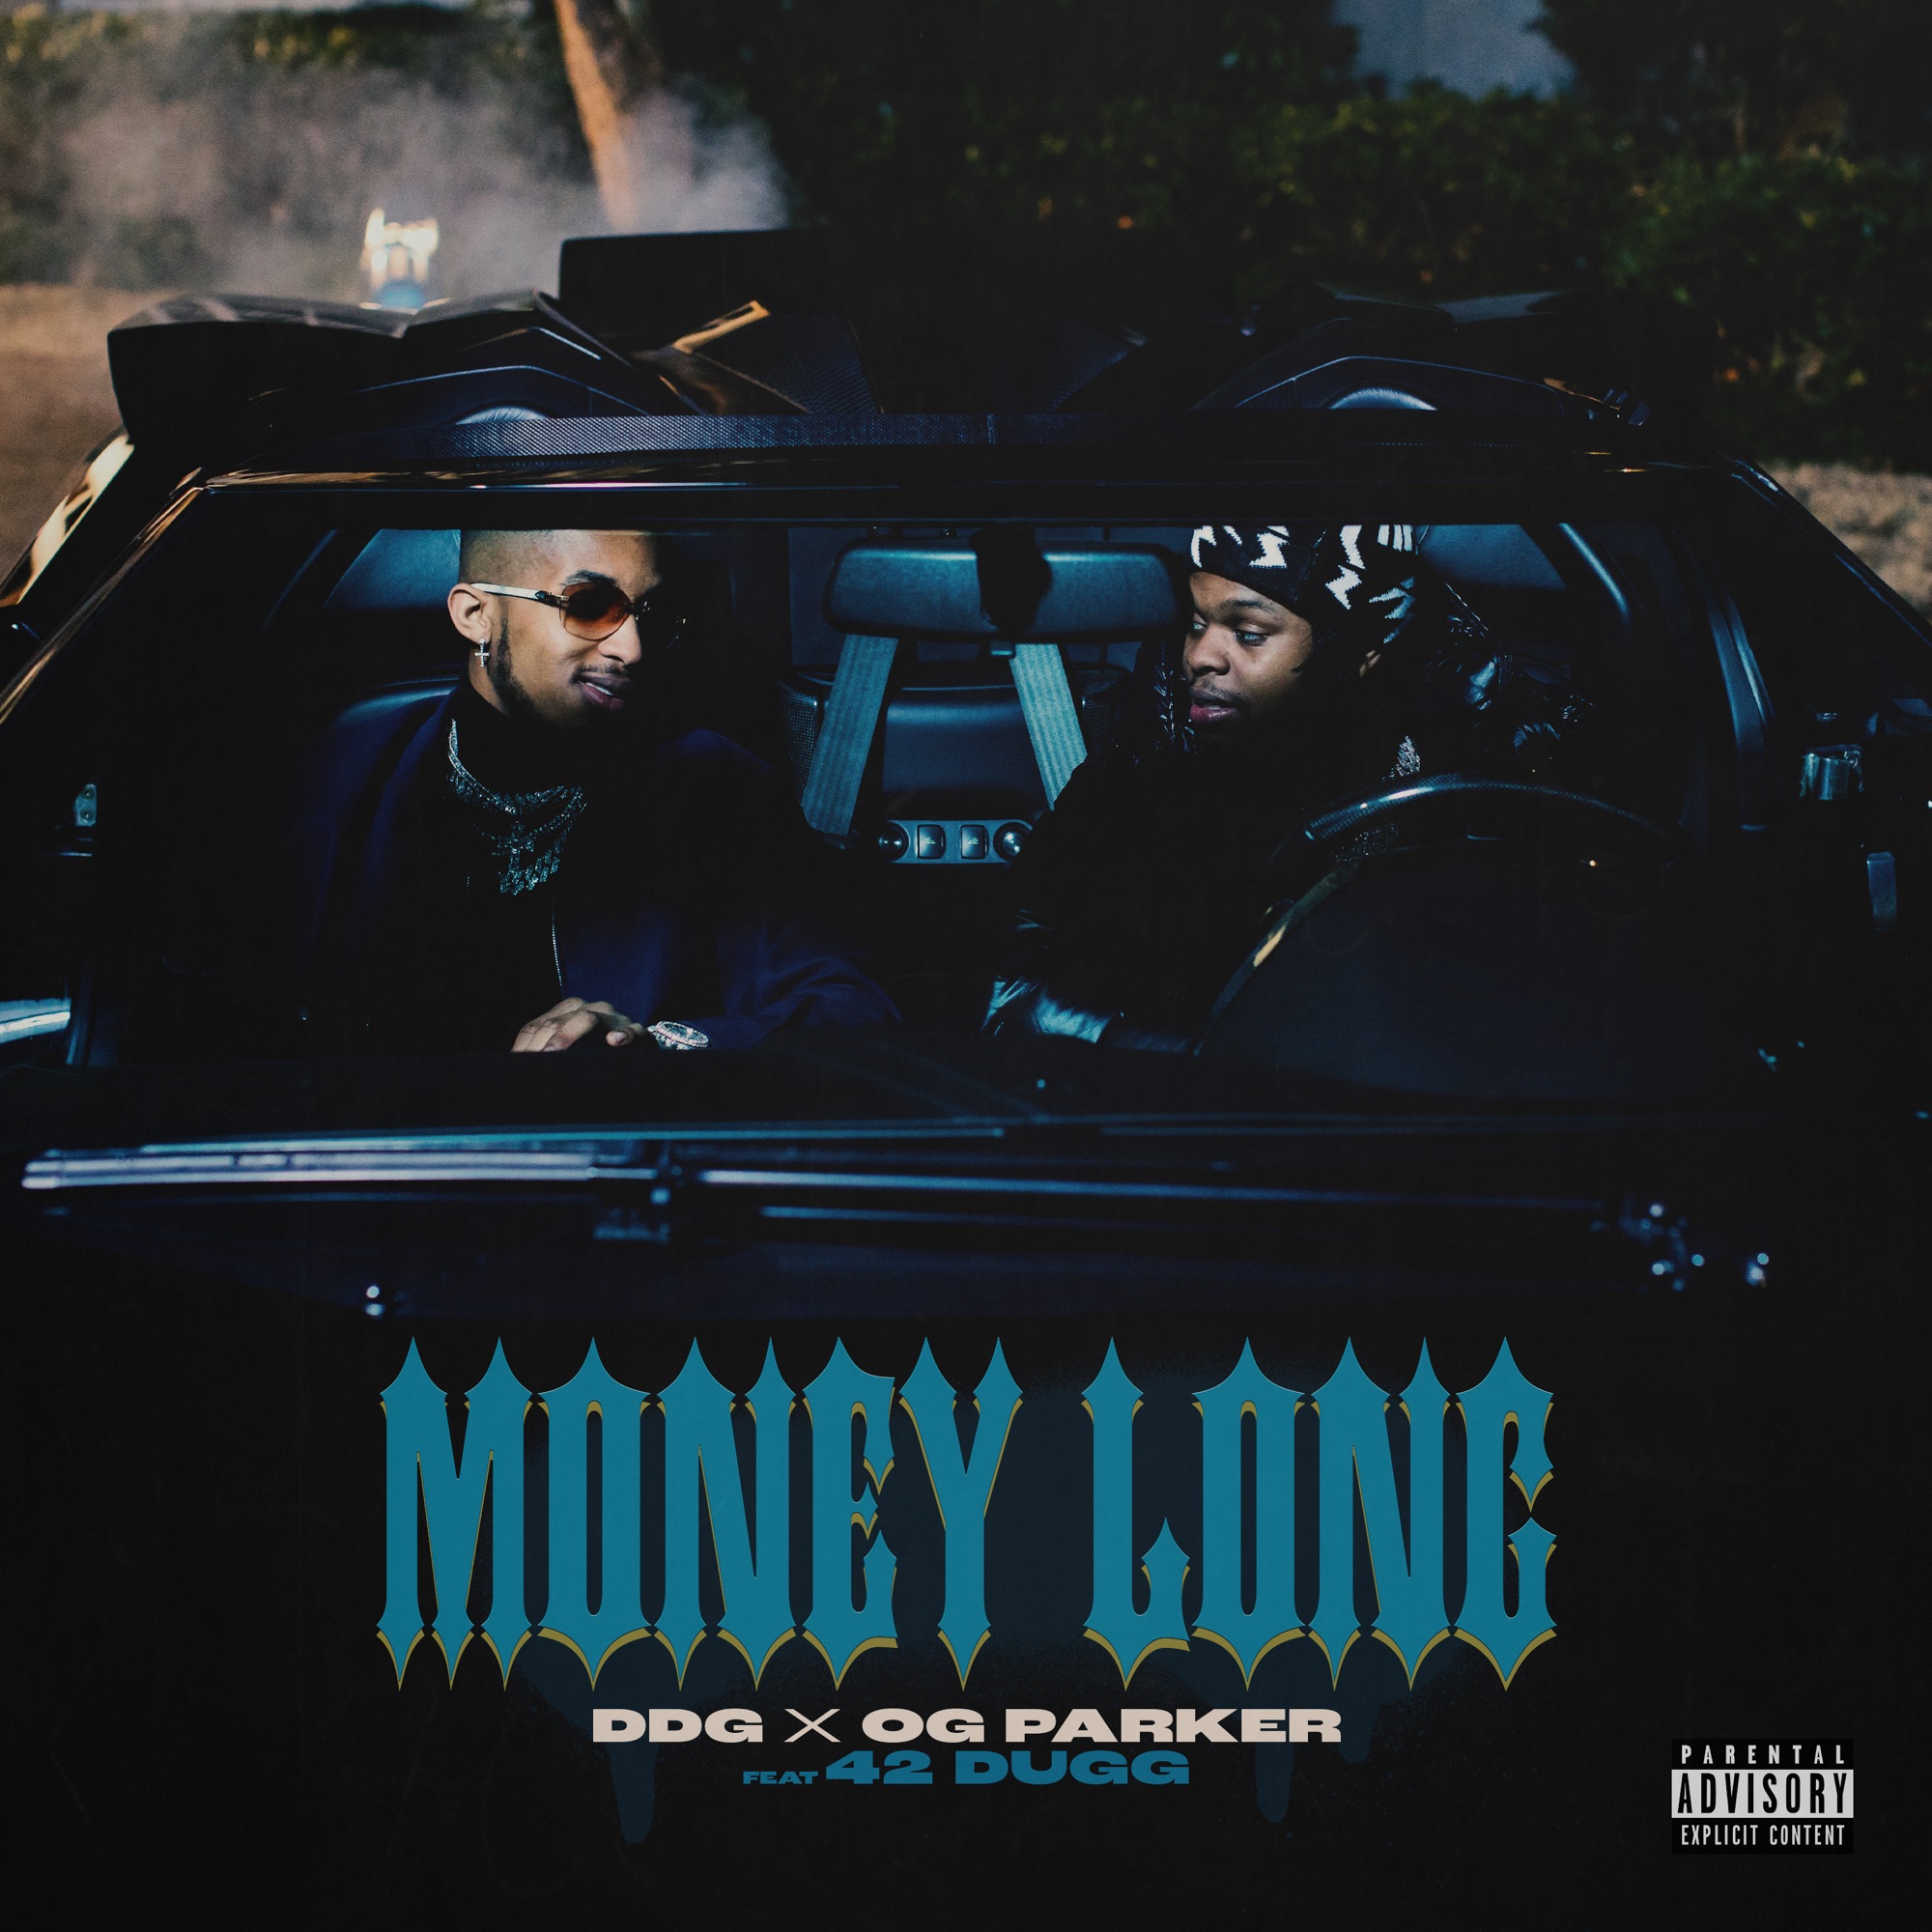 DDG & OG Parker - Money Long (feat. 42 Dugg) - Single